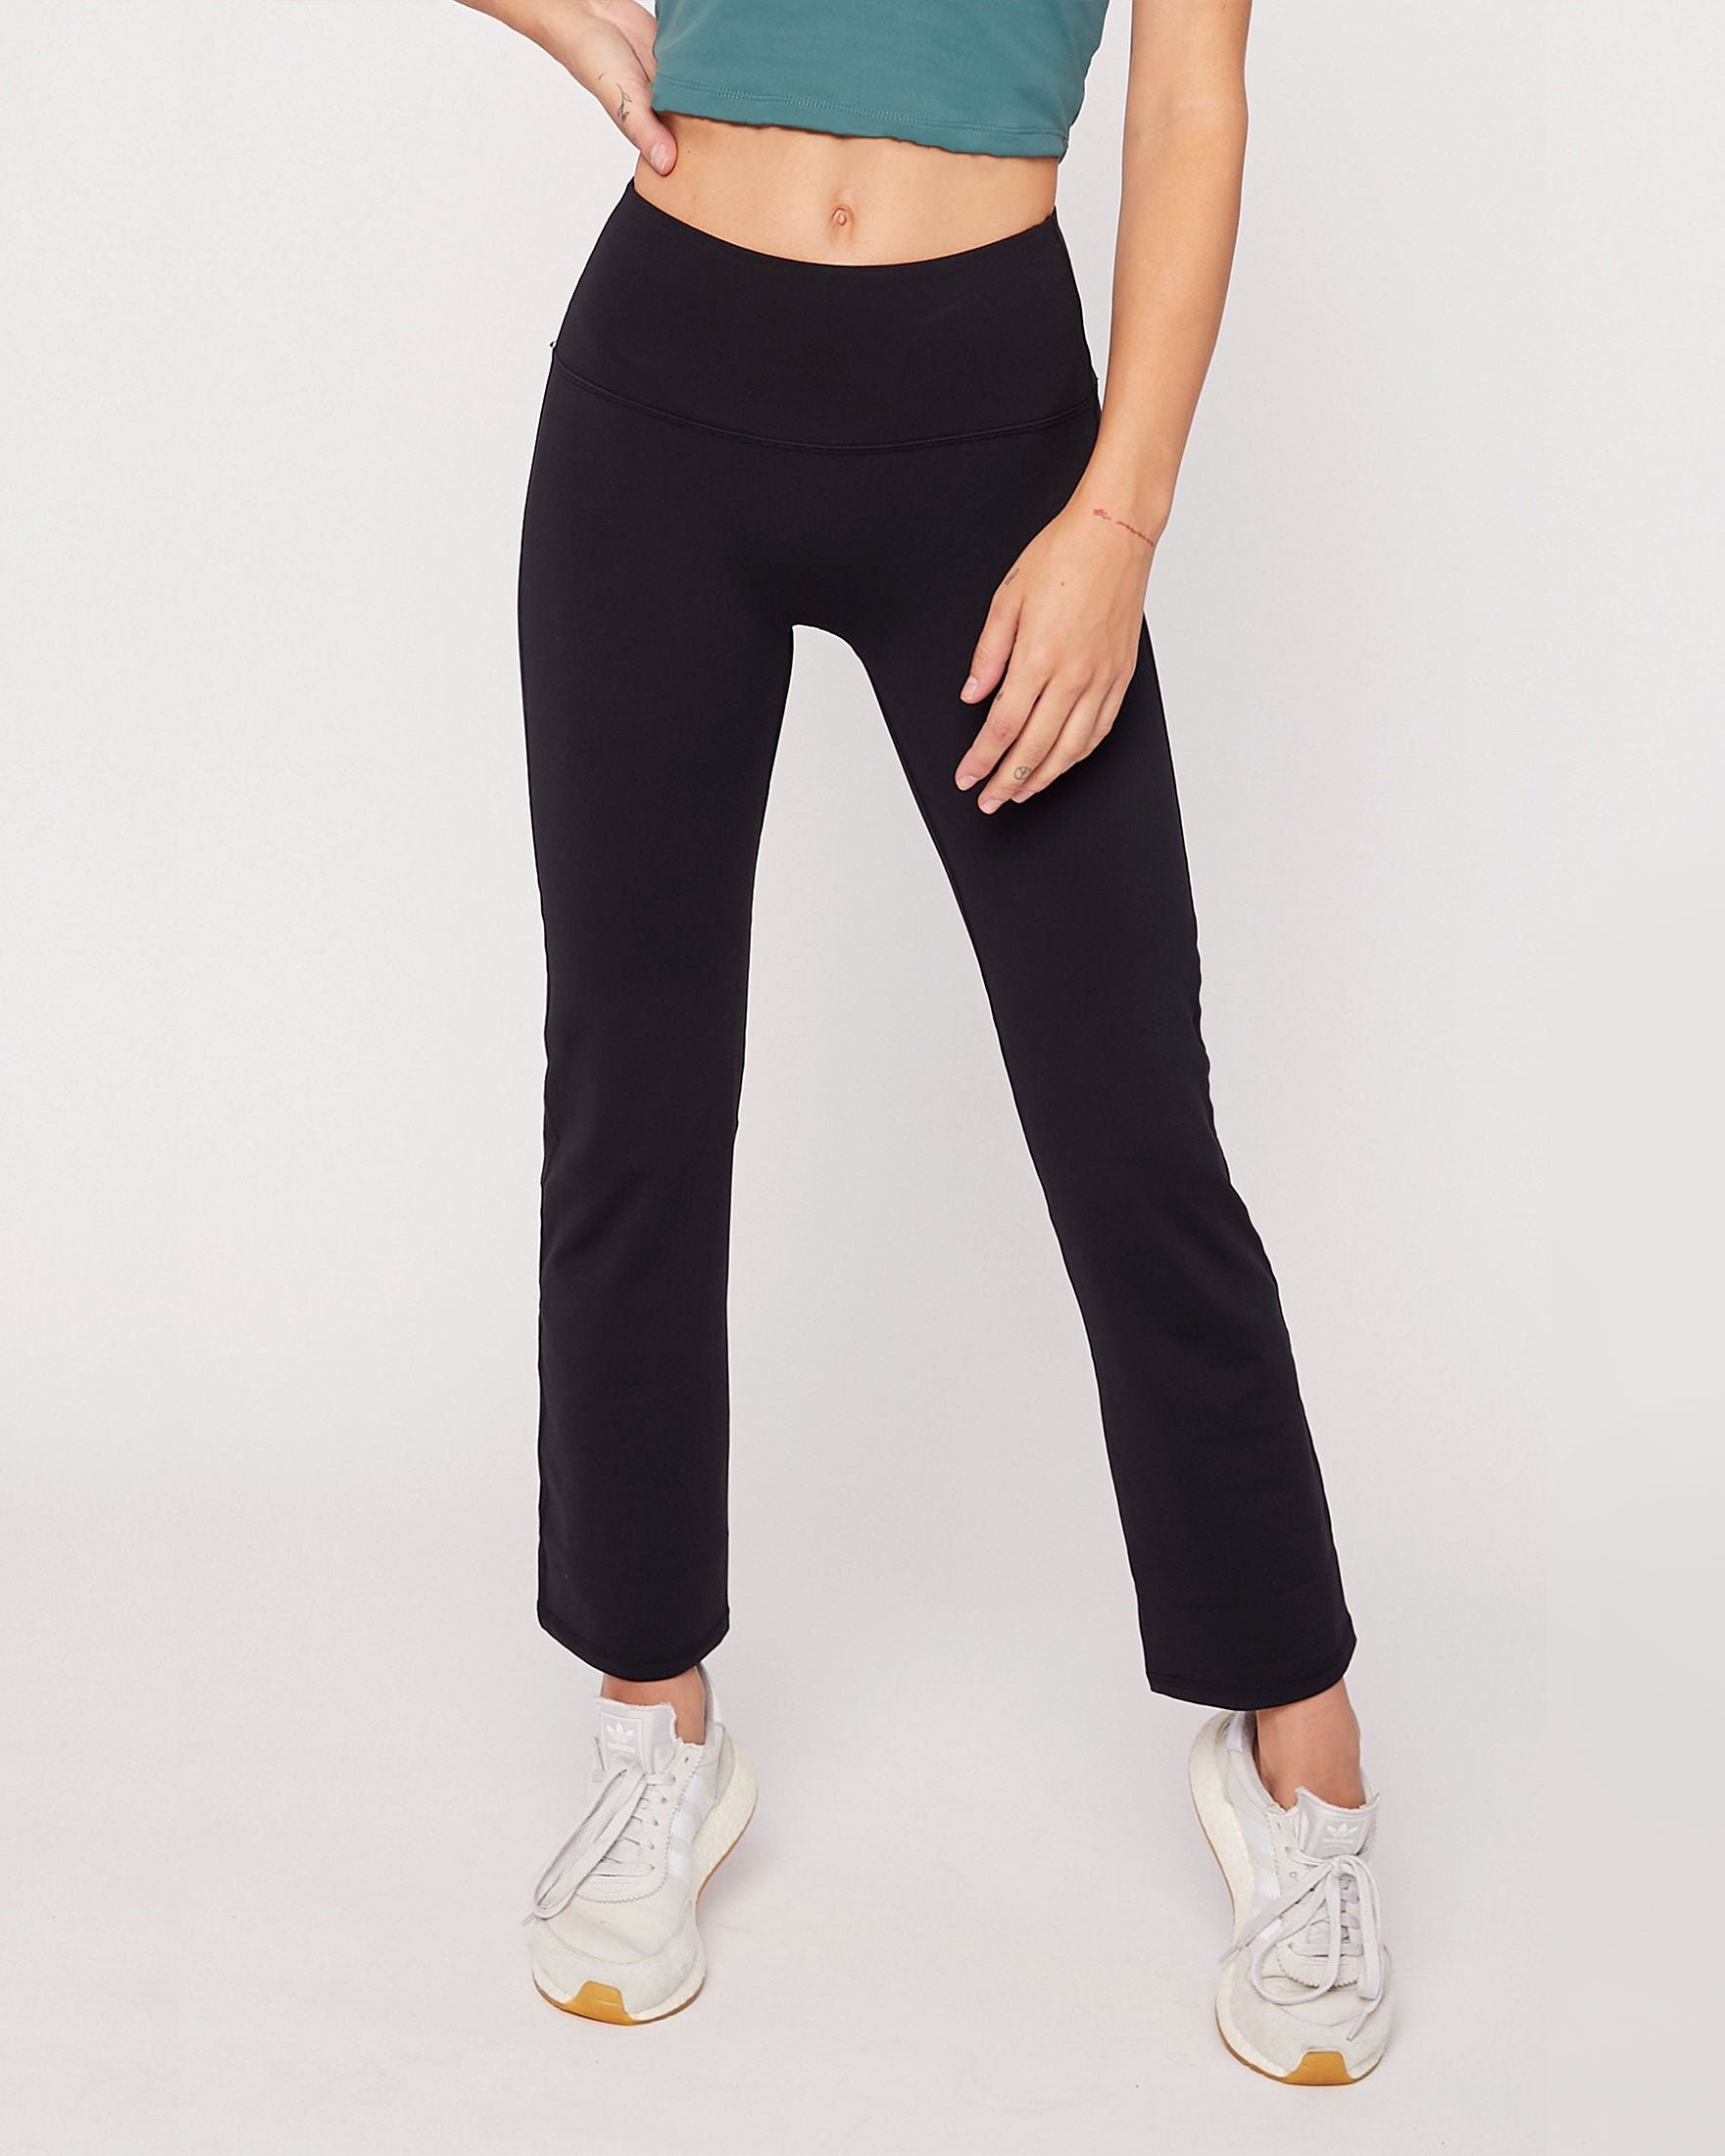 Buy MOOSLOVER Women Ribbed Bootcut Yoga Pants High Waisted Flare Bootleg Workout  Leggings, #1 Dark Coffee, Medium at Amazon.in